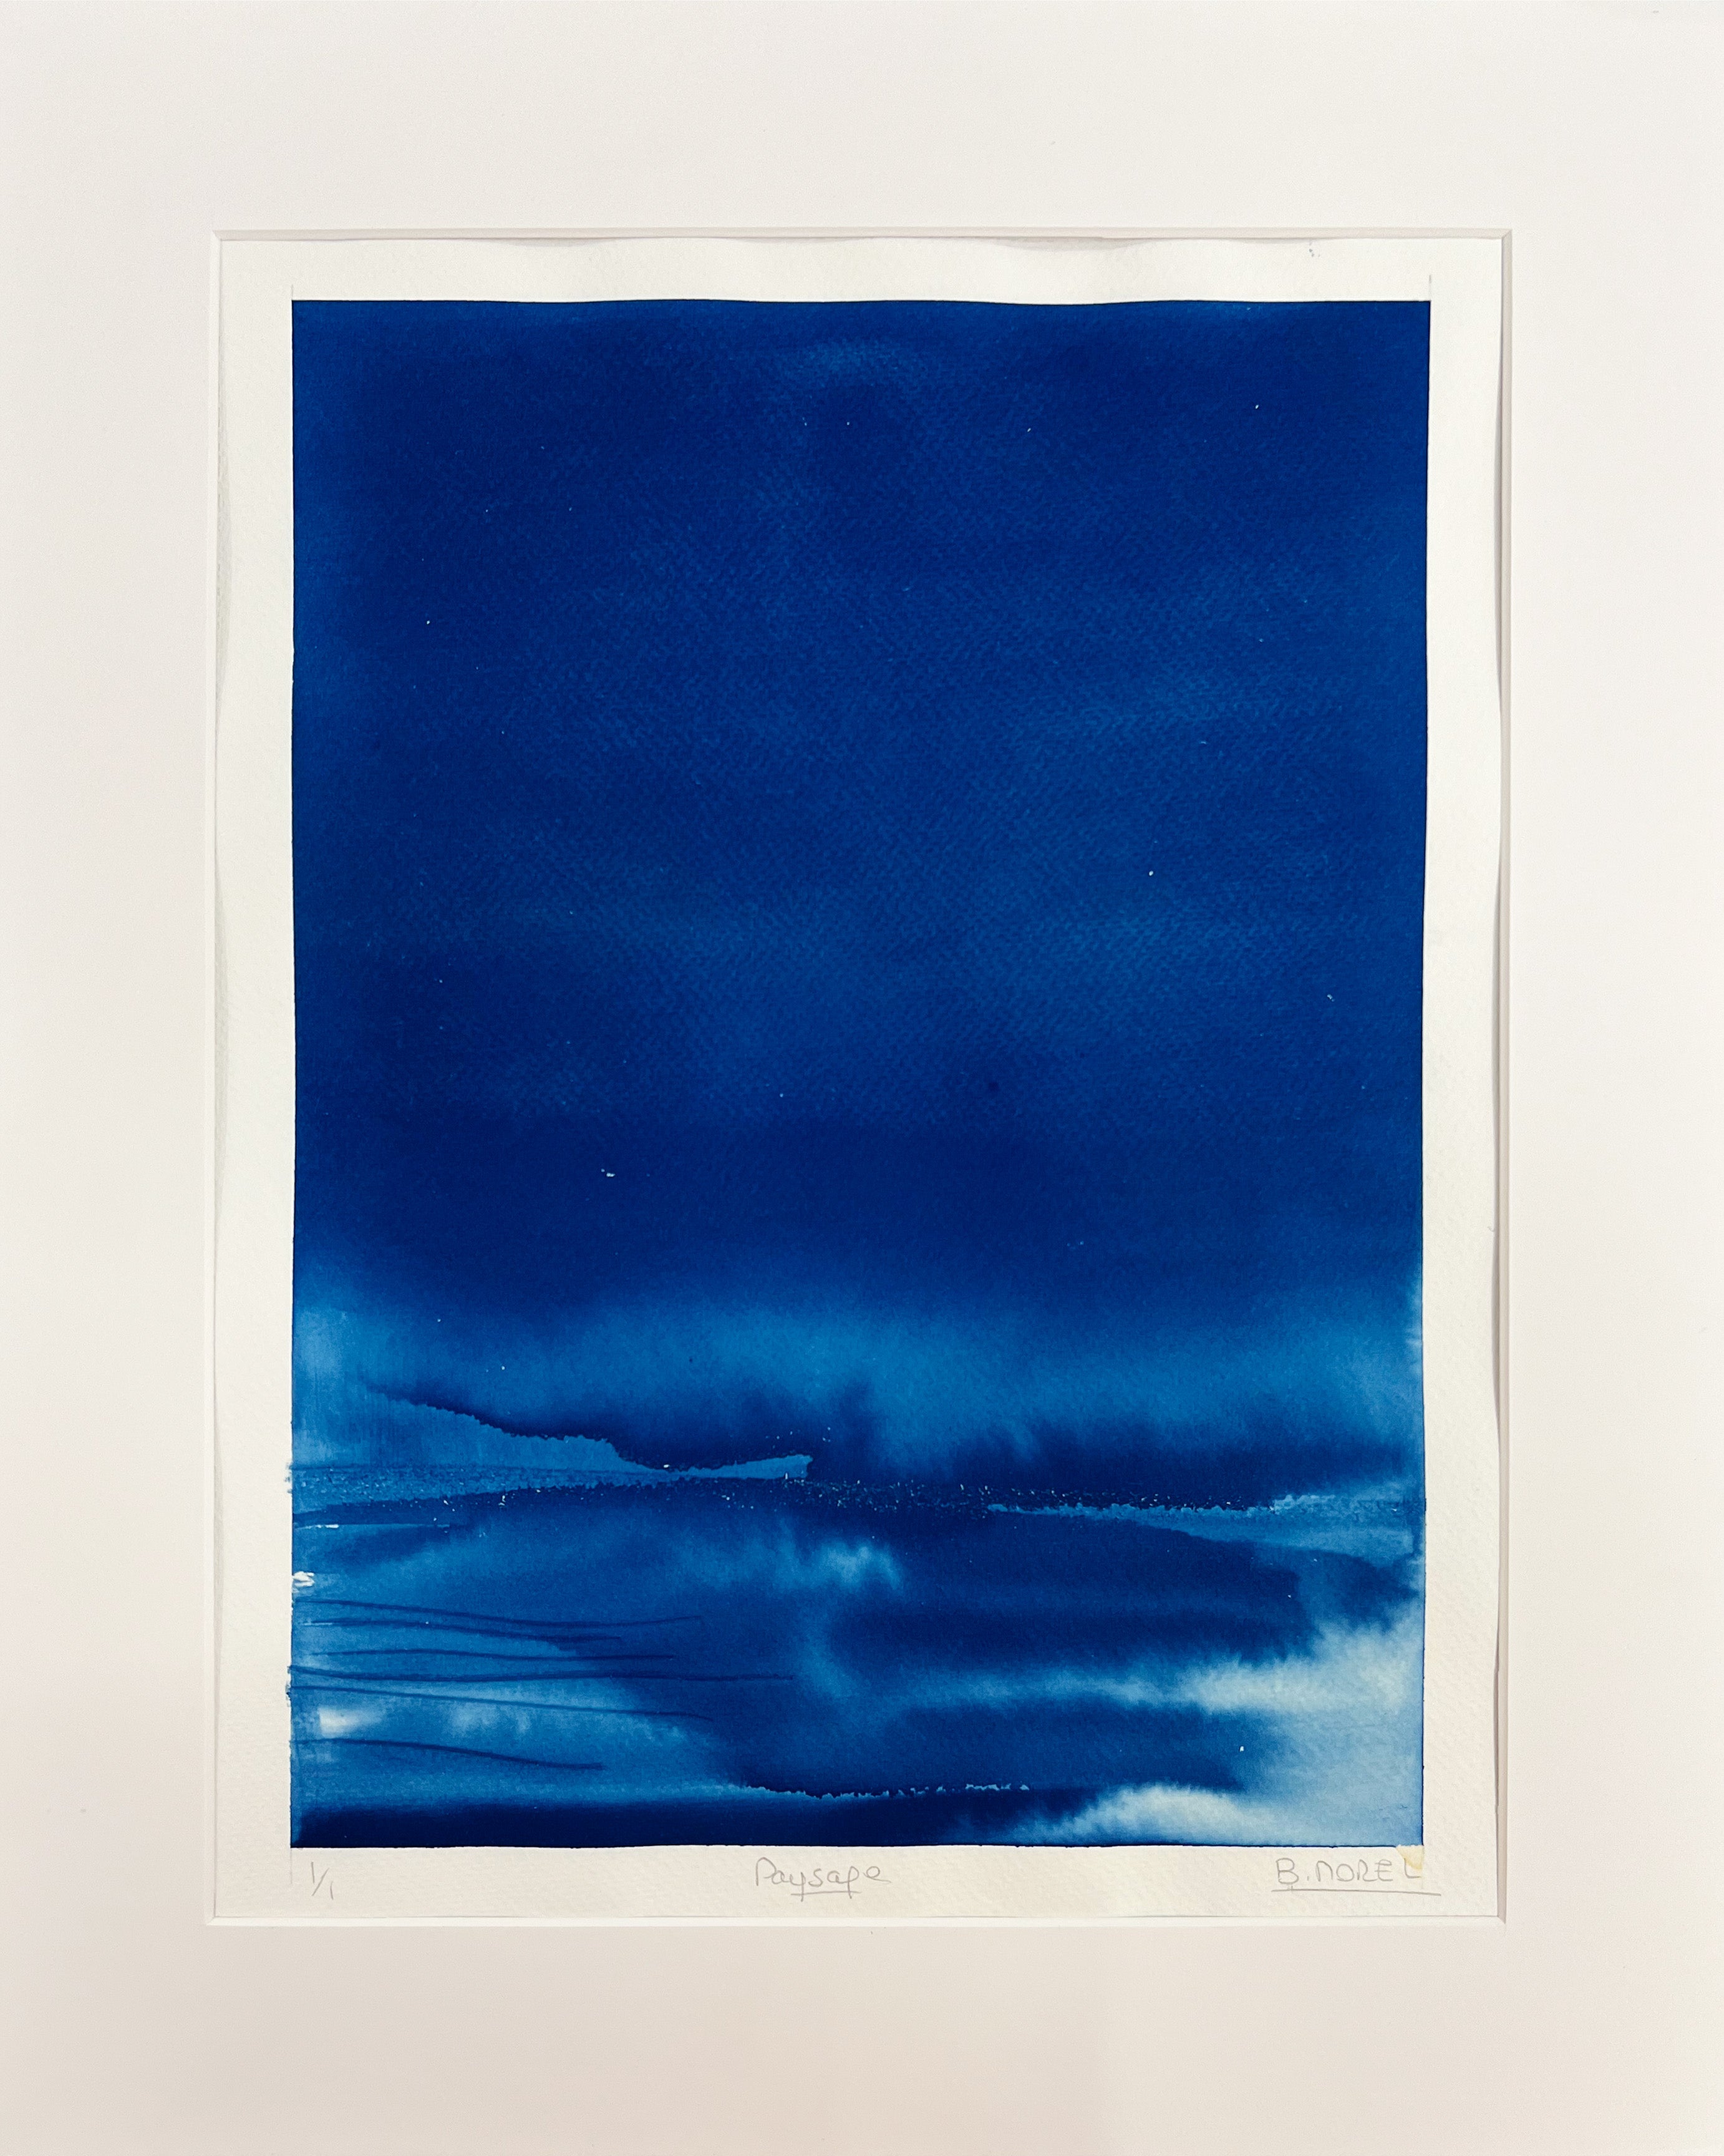 "Paysage", Brigitte Morel, cyanotype